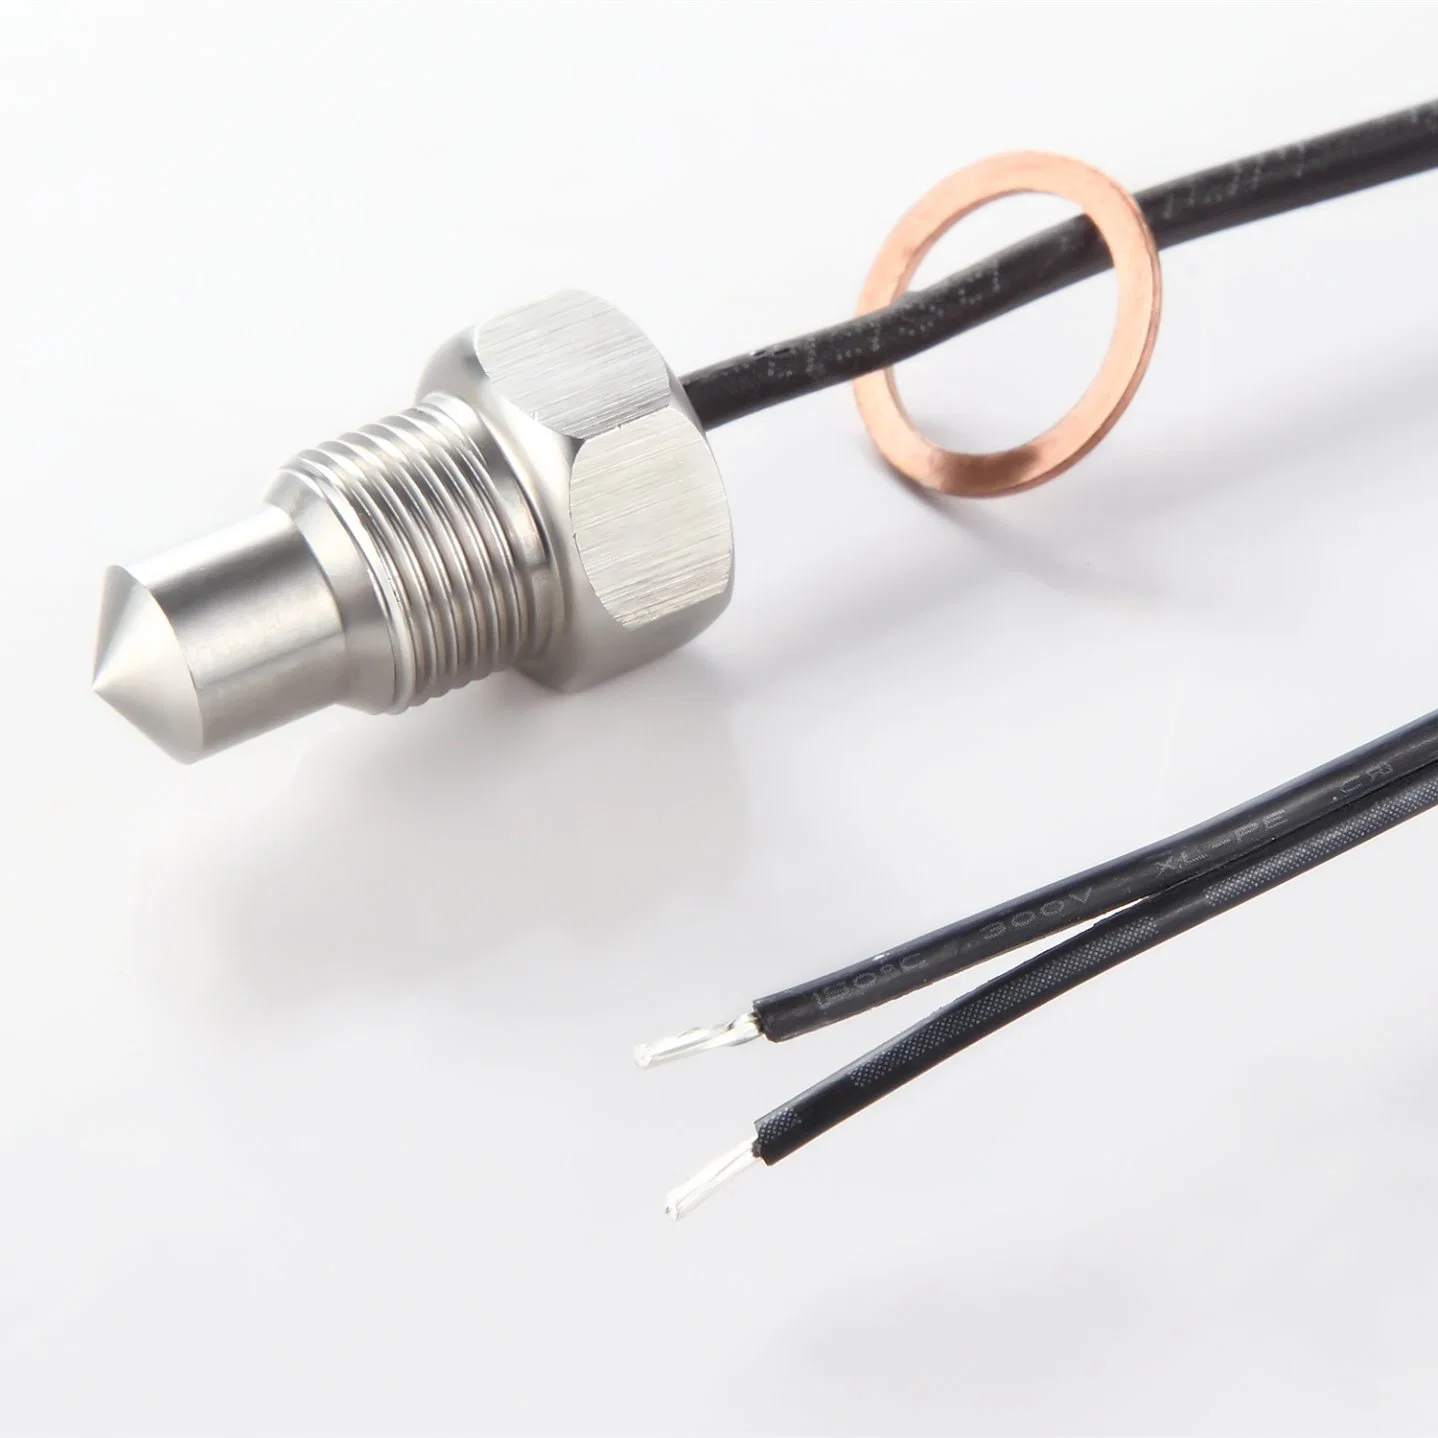 PT1000 M8 Threaded Type Probe Temperature Sensor Thermocouple Waterproof High Precision 3 Wire Cable